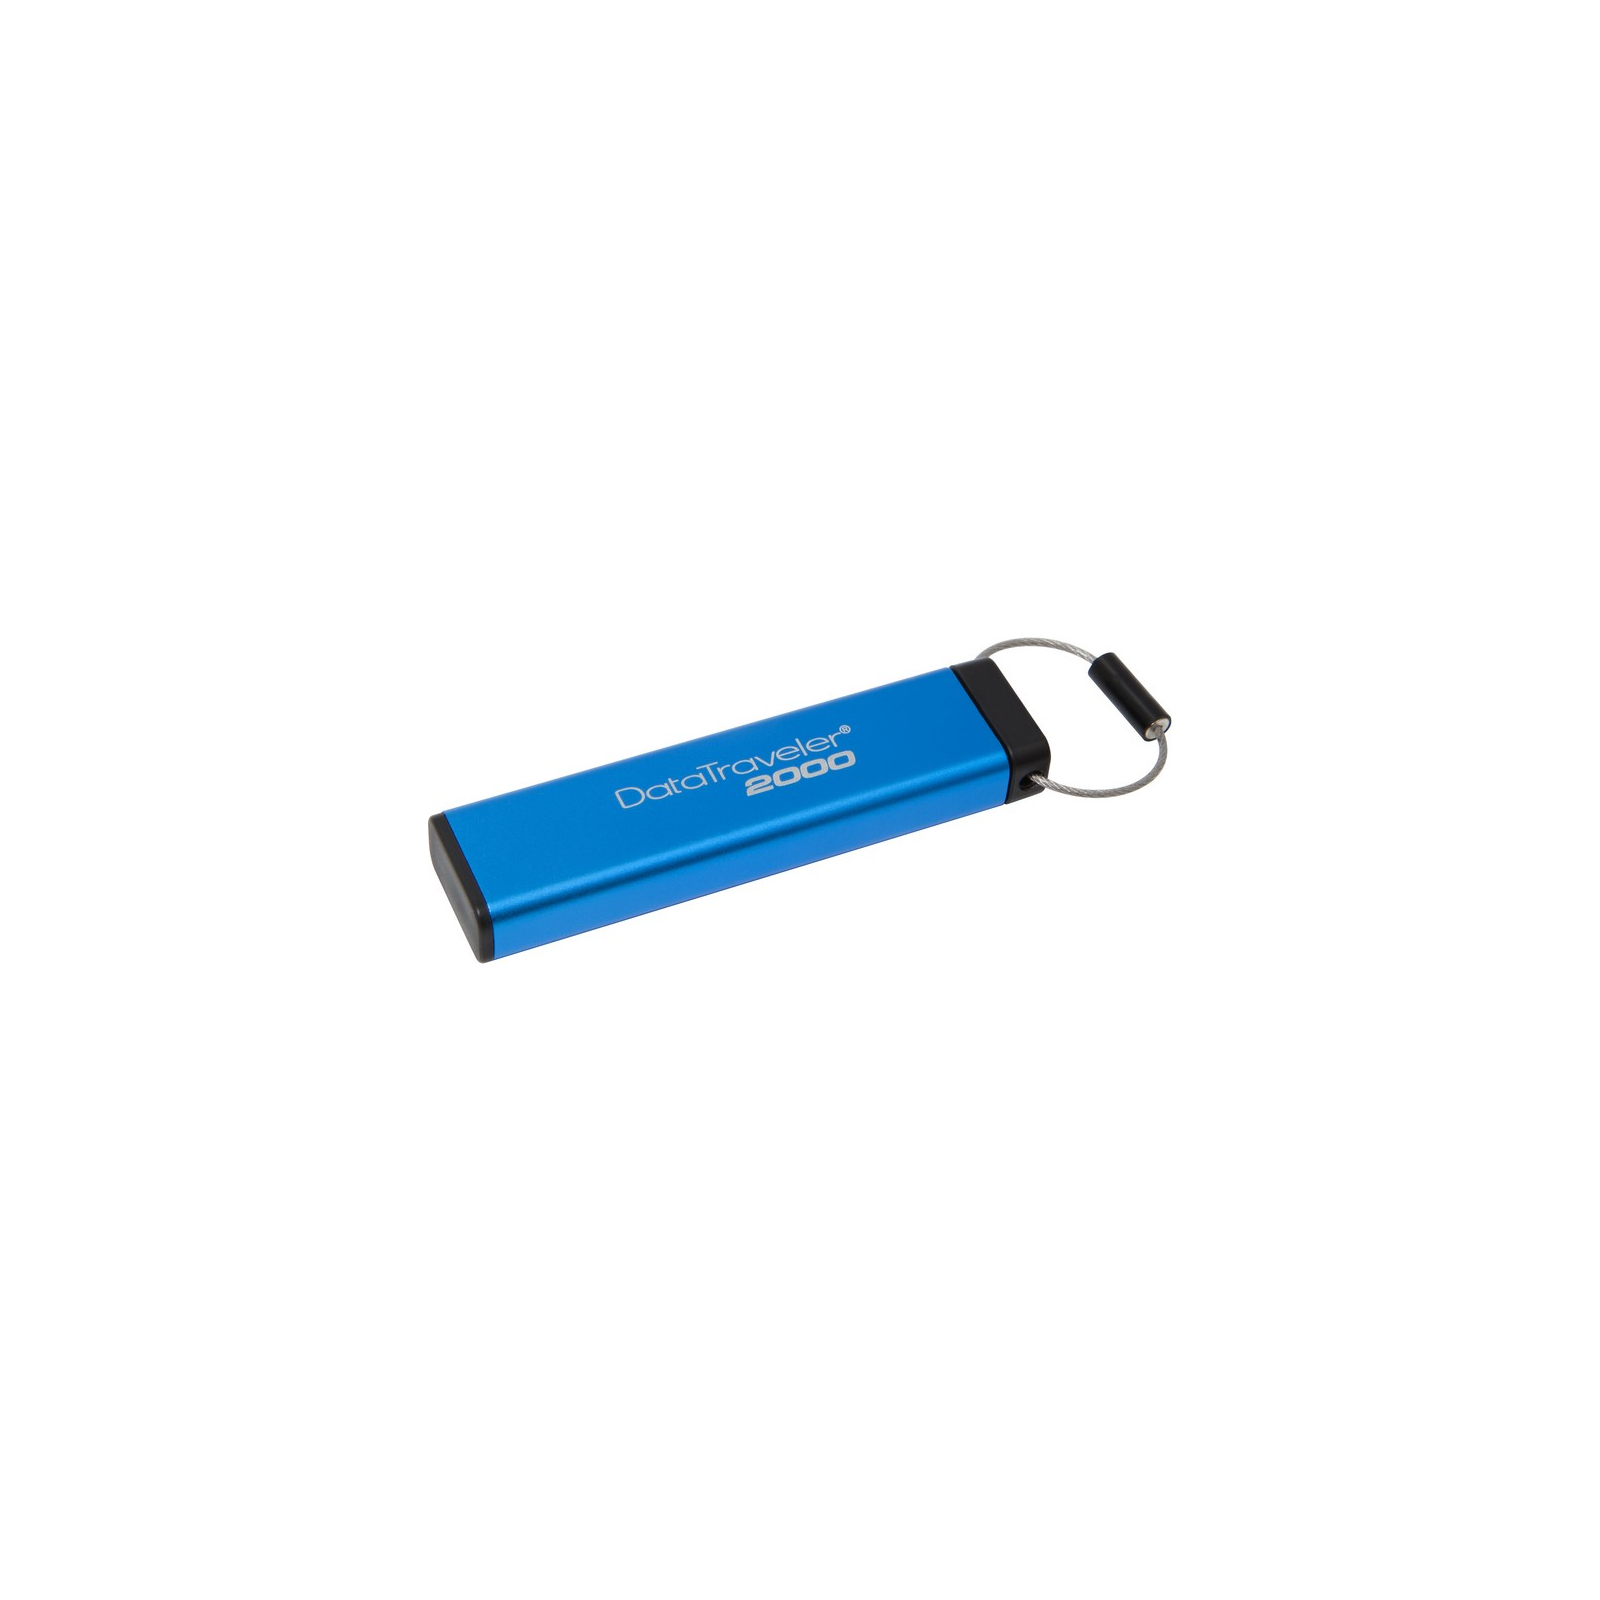 USB флеш накопитель Kingston 32GB DT 2000 Metal Security USB 3.0 (DT2000/32GB) изображение 2